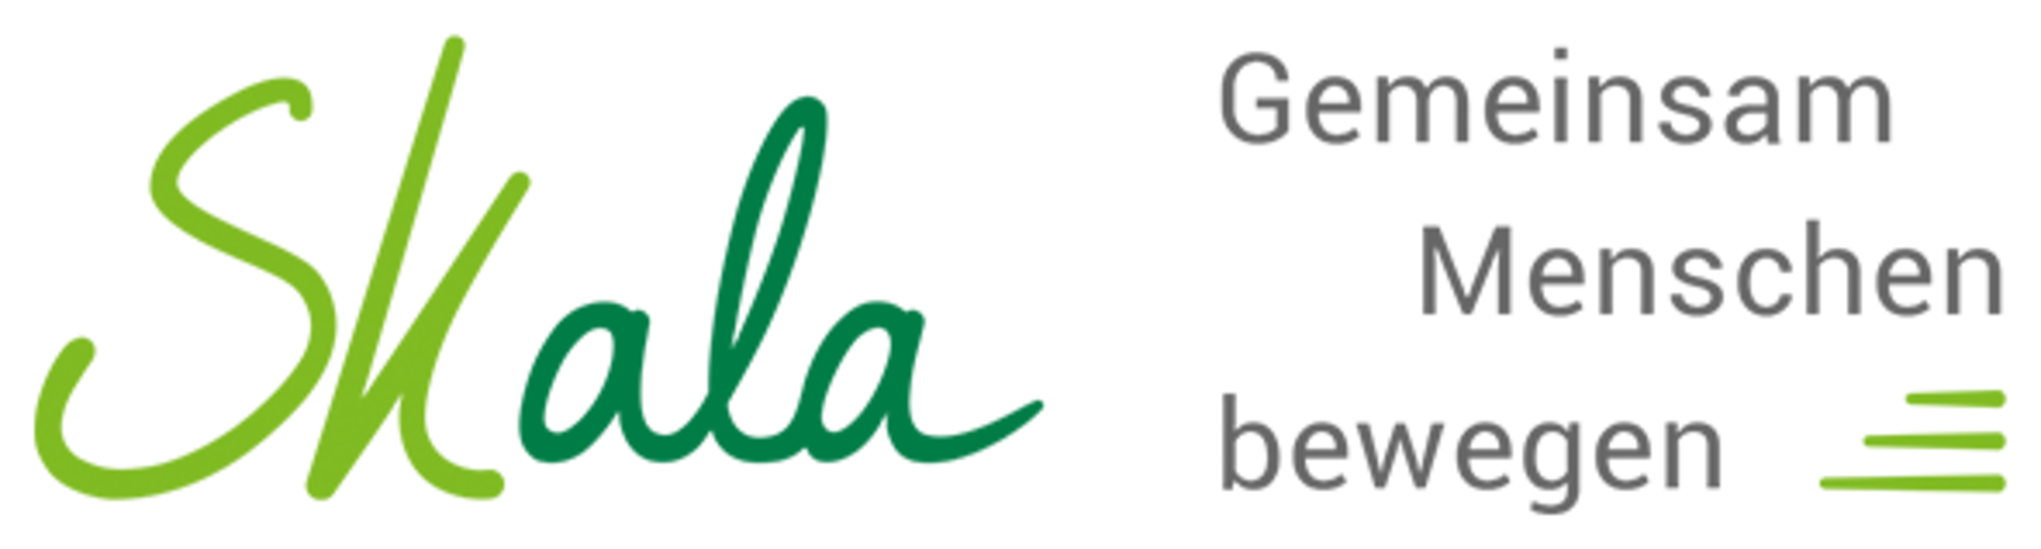 Logo der SKala-Initiative